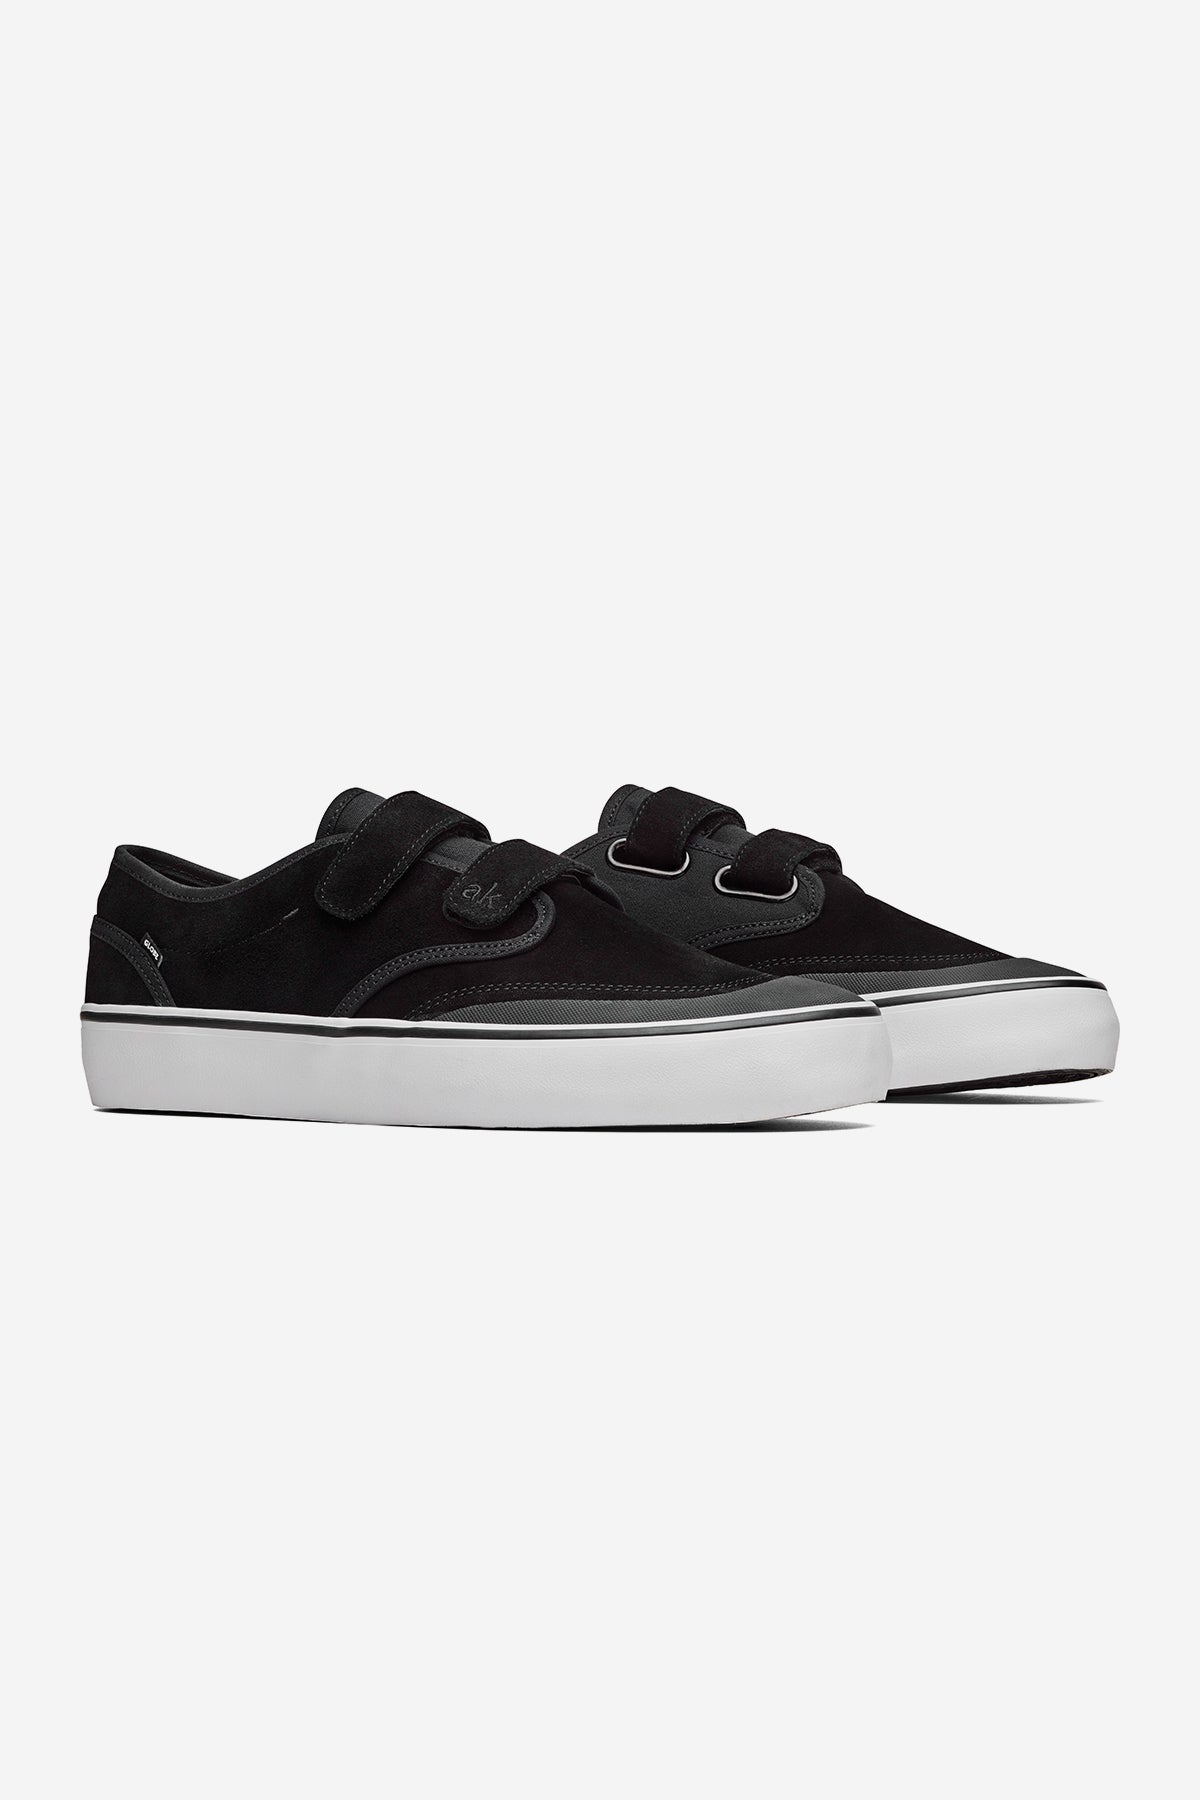 motley ii strap black white skate shoes